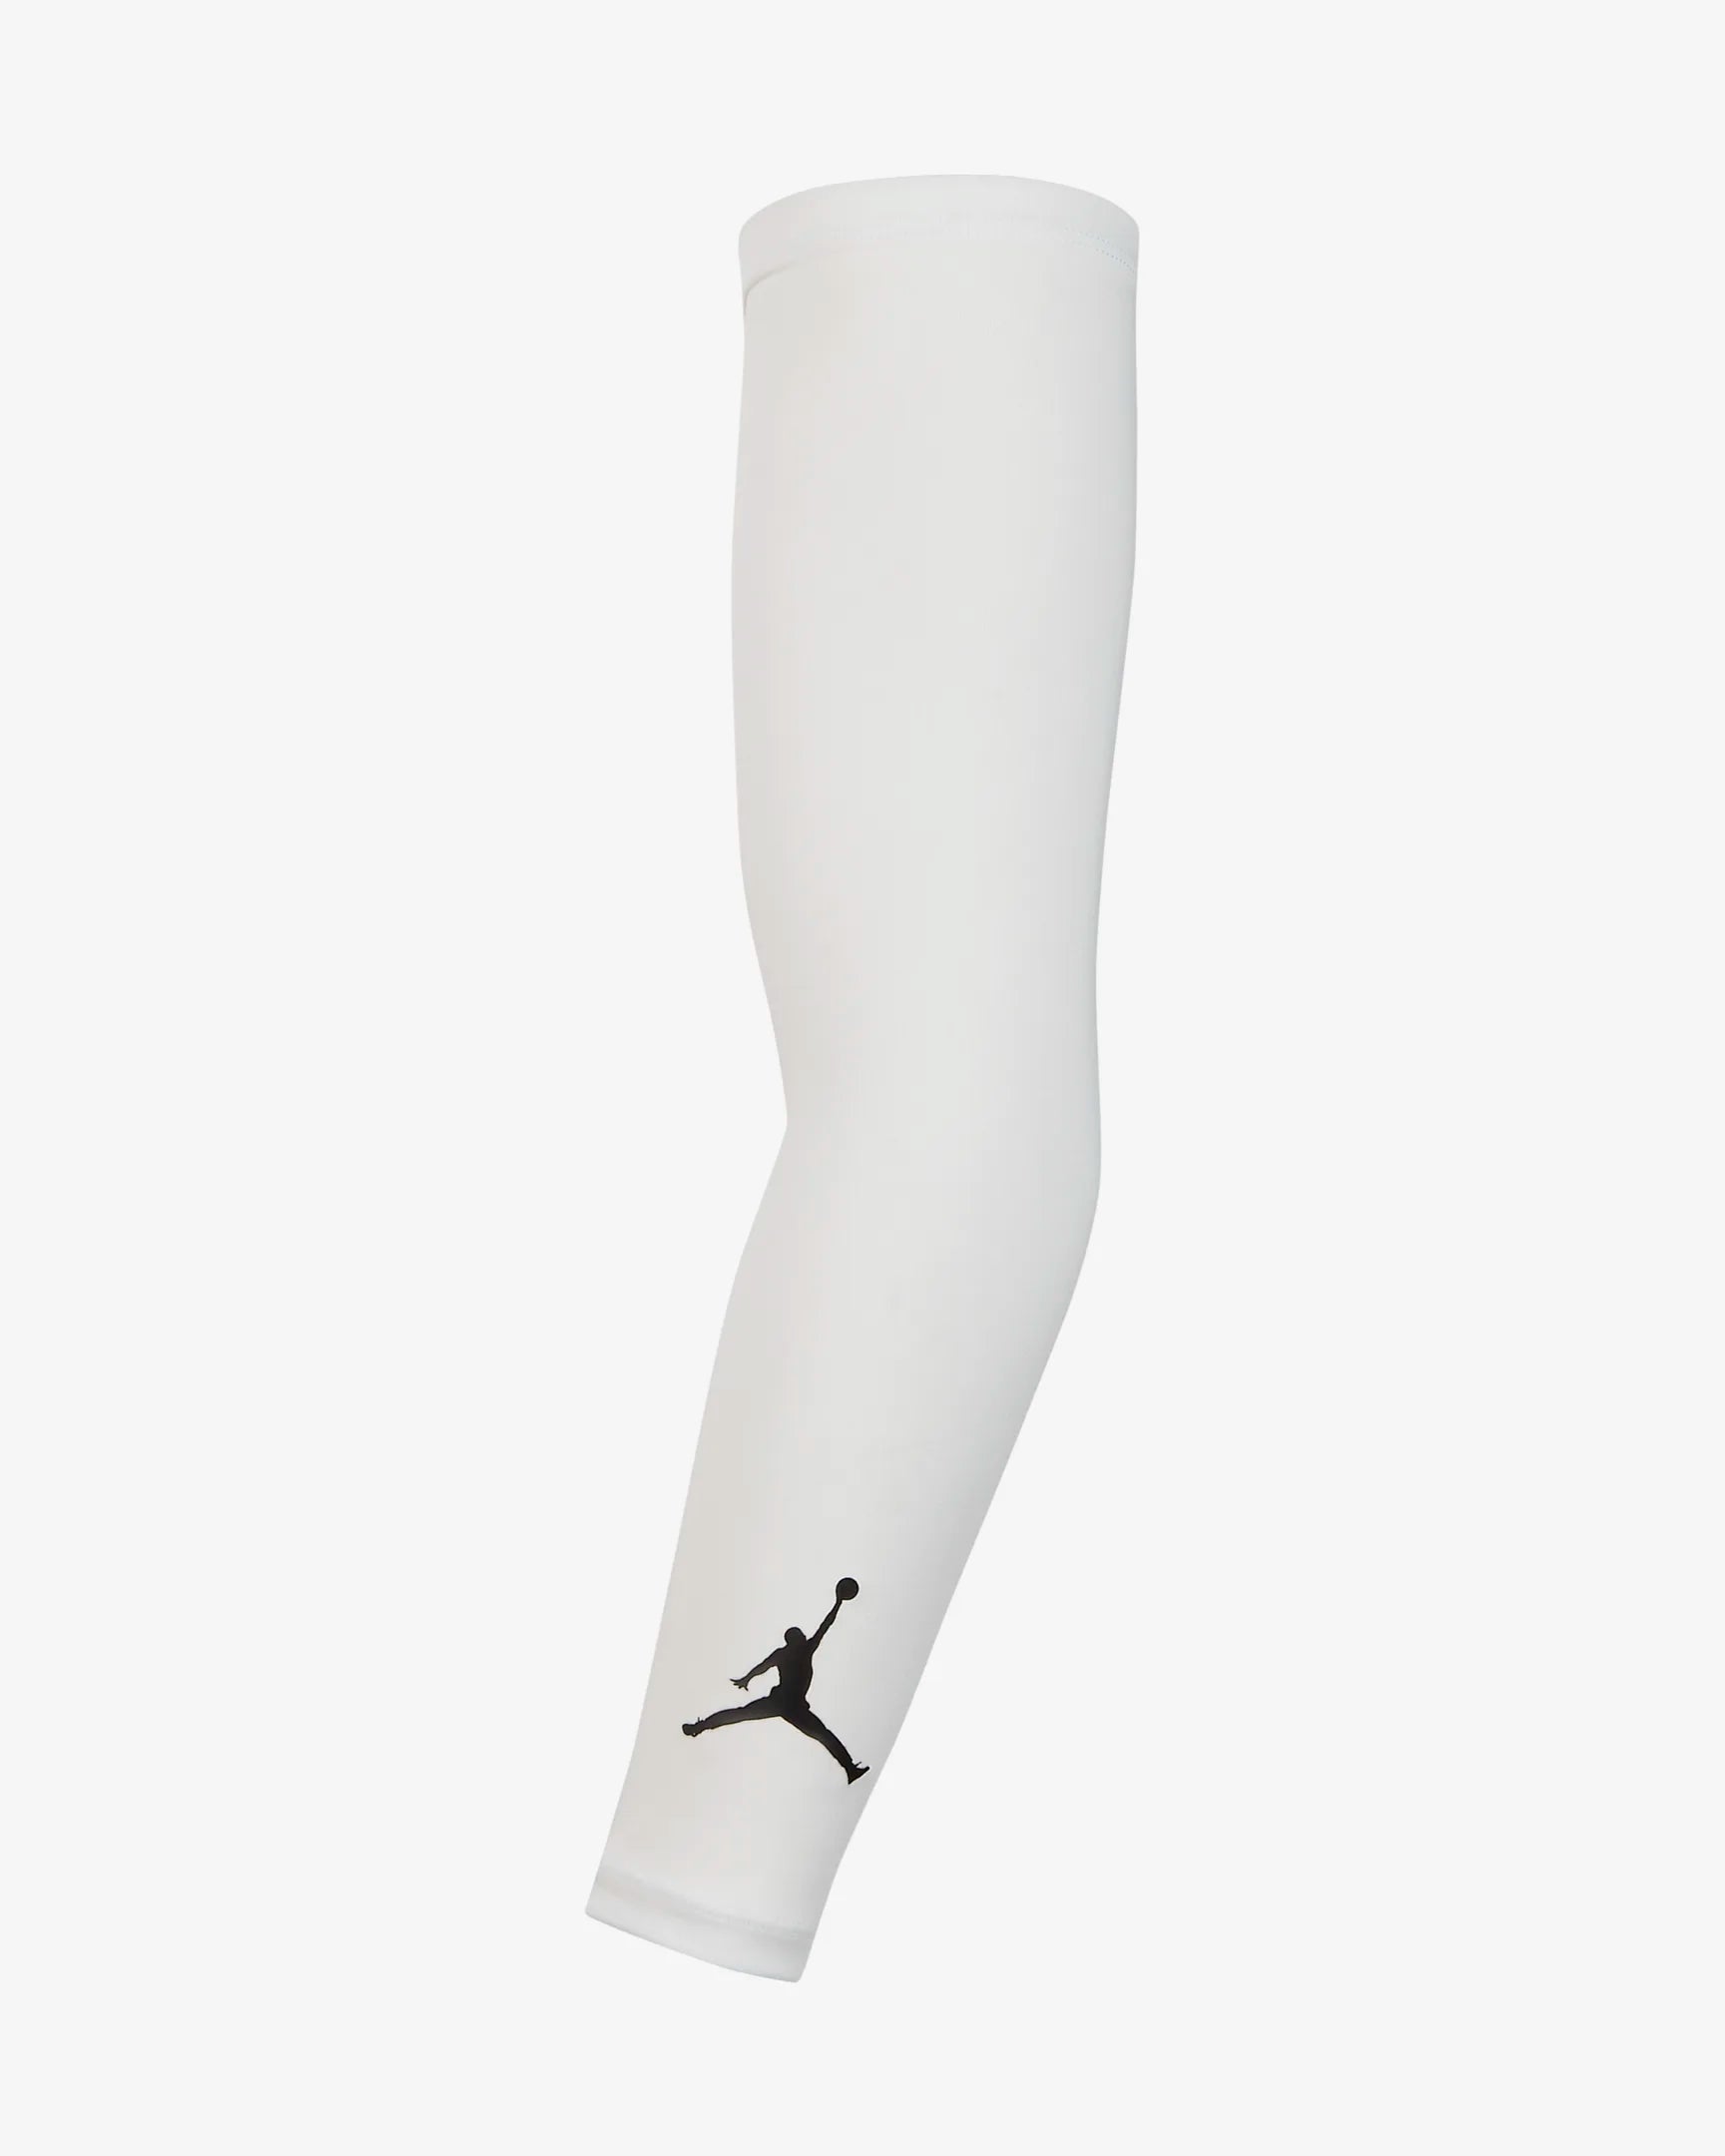  Nike NBA Shooter Sleeve - Pair(Black/White, SM) : Sports &  Outdoors